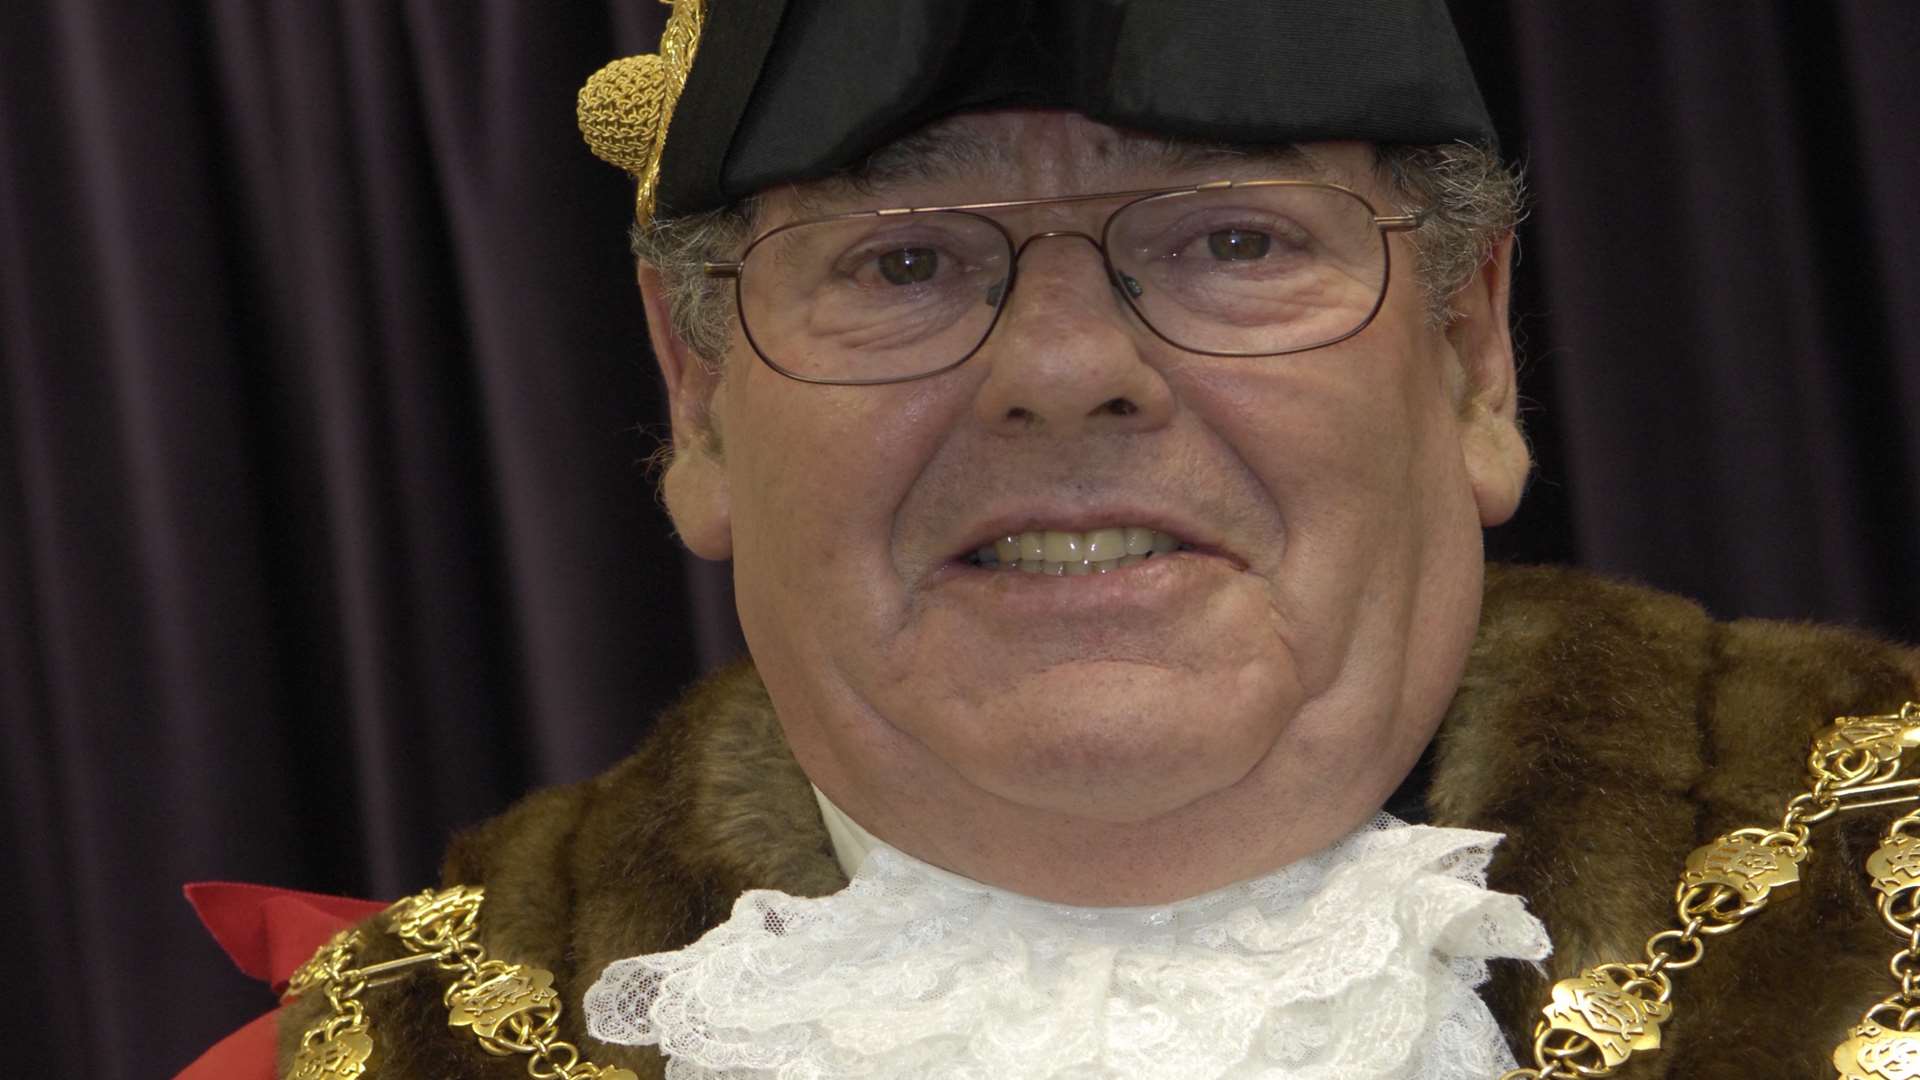 Mayor of Folkestone Roger West